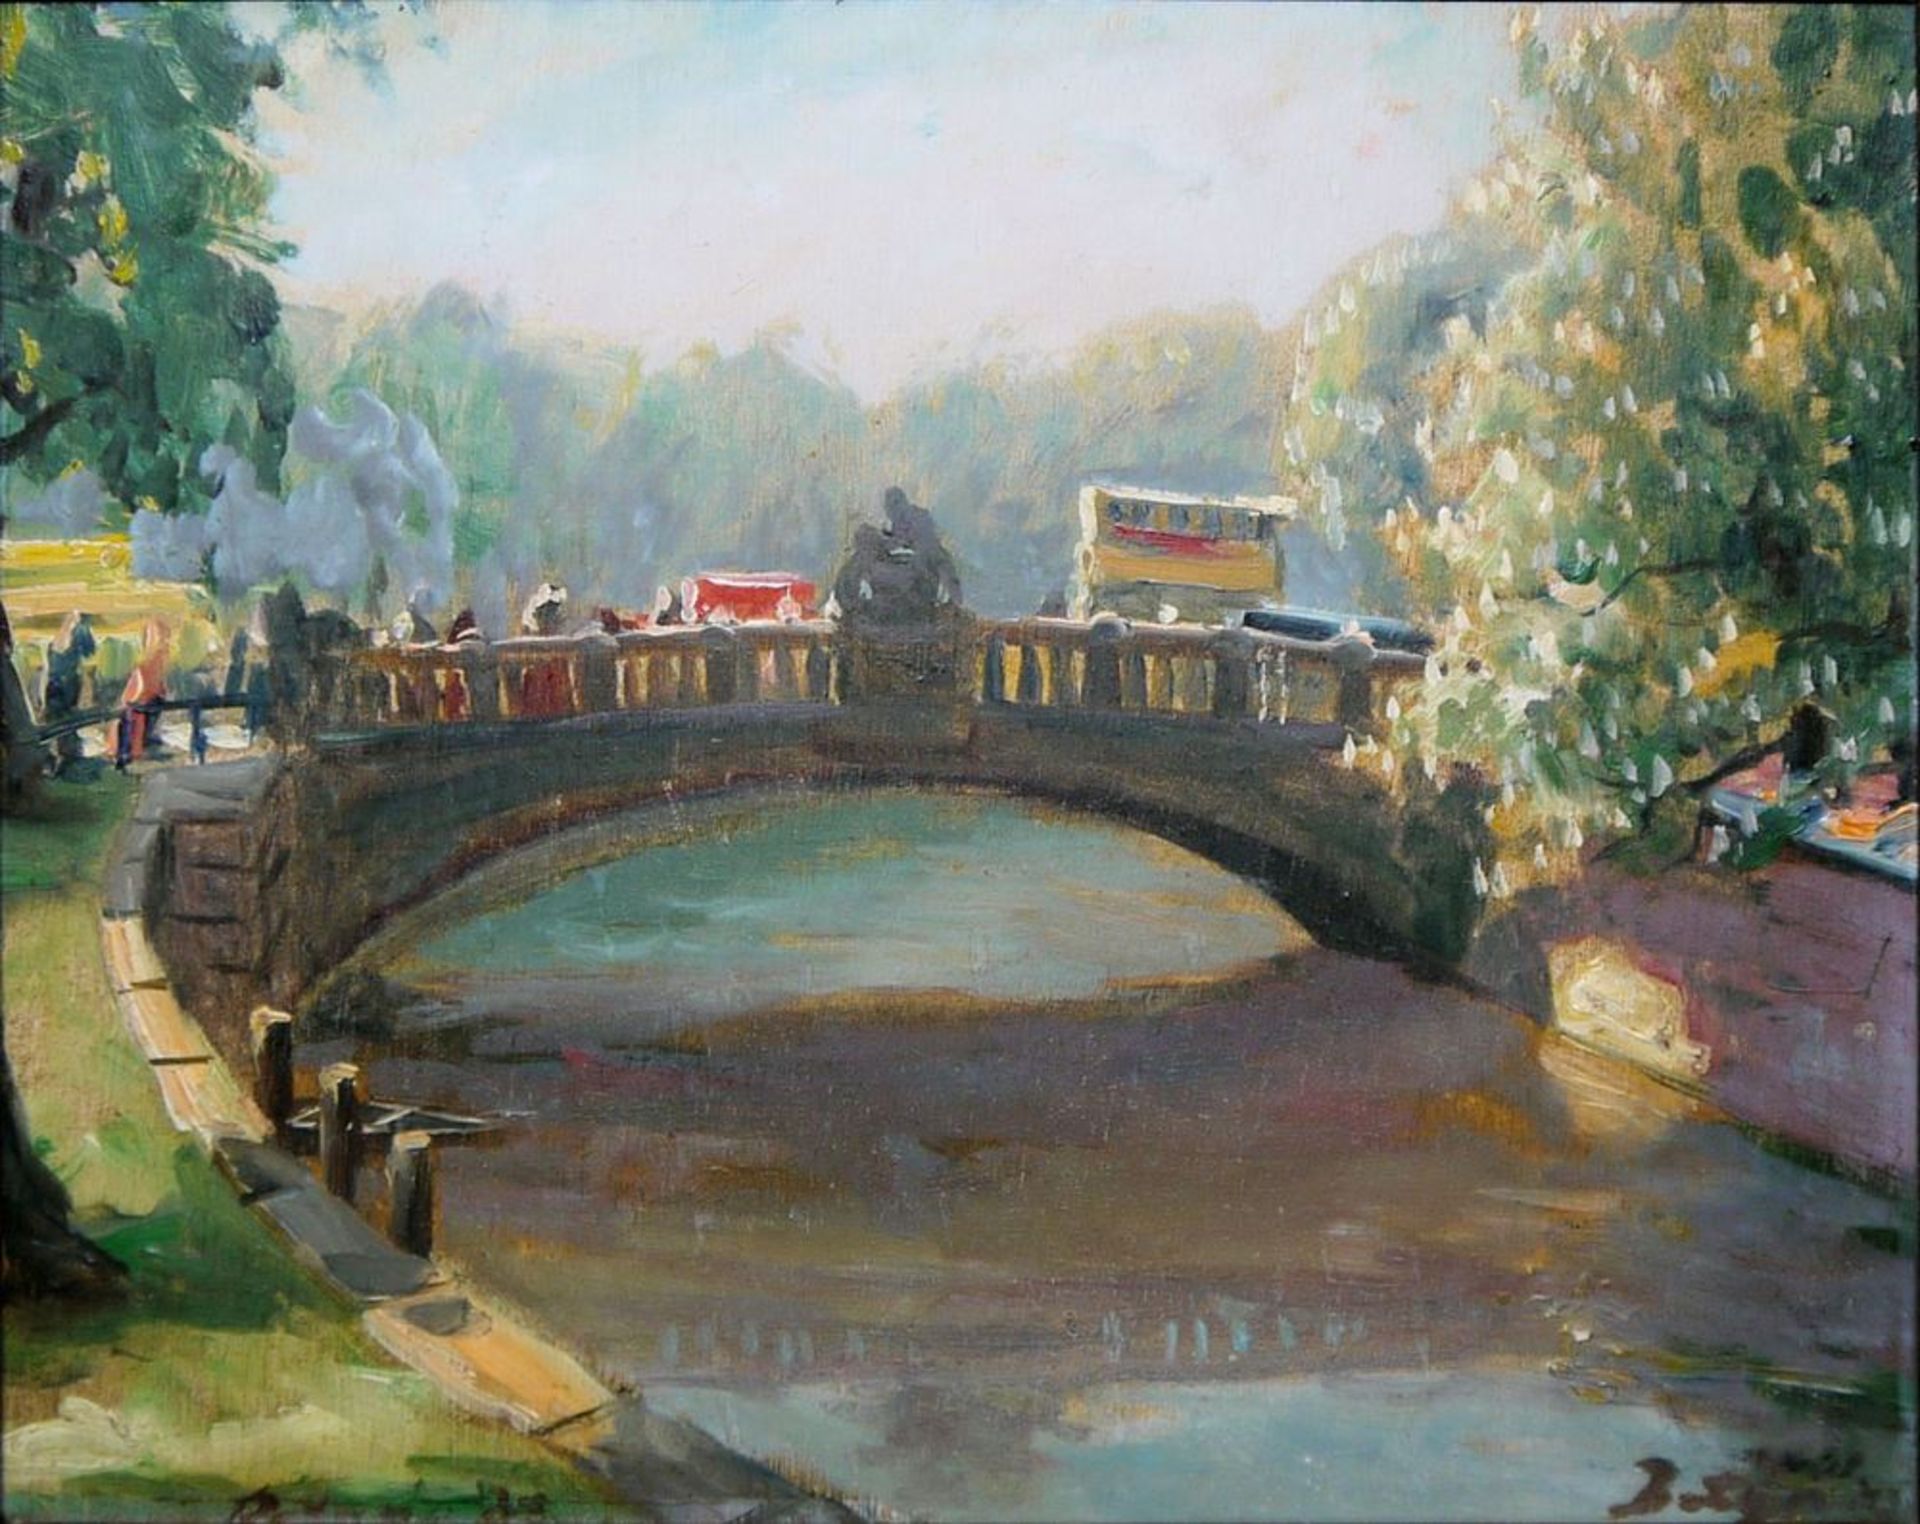 Paul Betyna, Herkules Brücke Berlin, Ölgemälde von 1930, gerahmt - Image 4 of 4